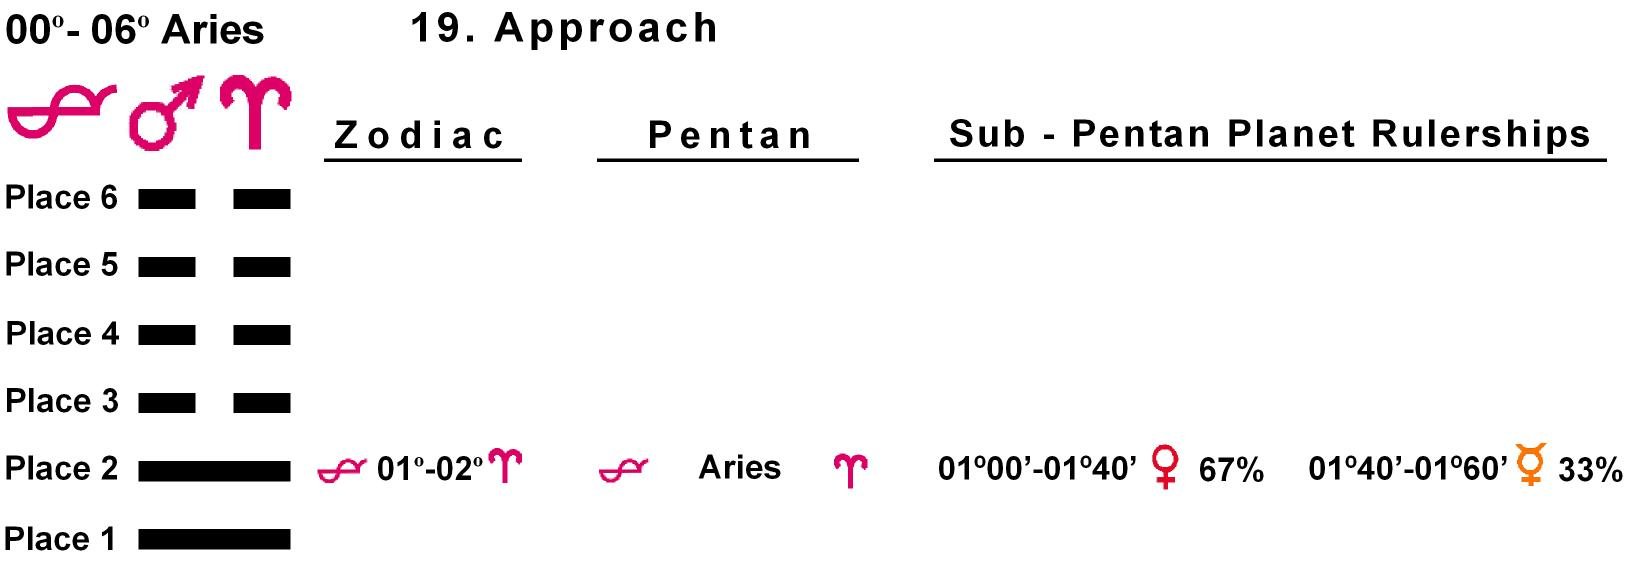 Pent-lines-01AR 01-02 Hx-19 Approach